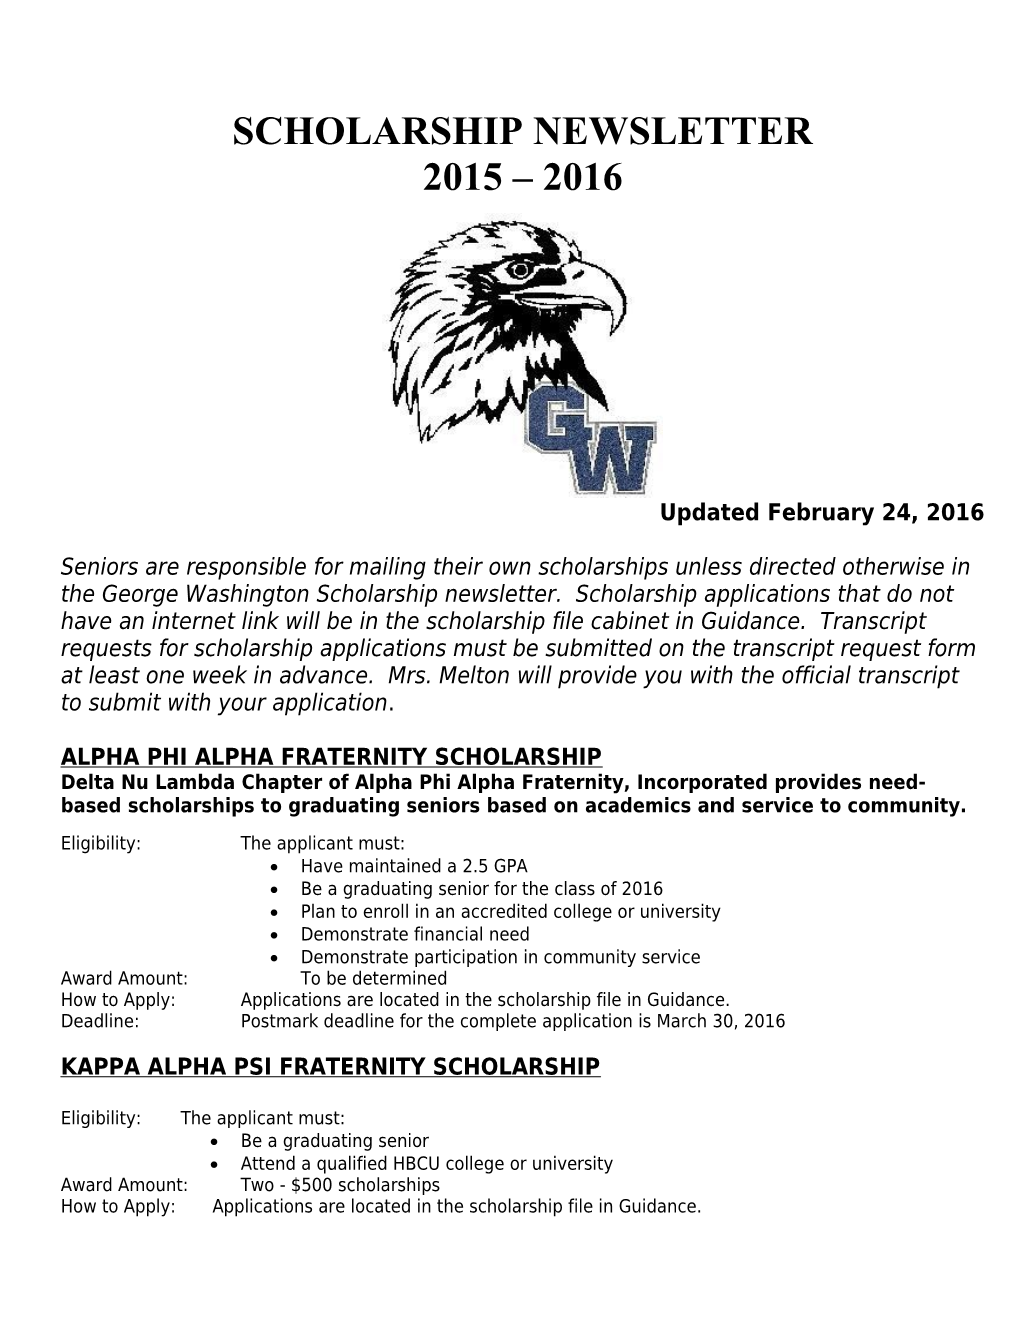 Alpha Phi Alpha Fraternity Scholarship